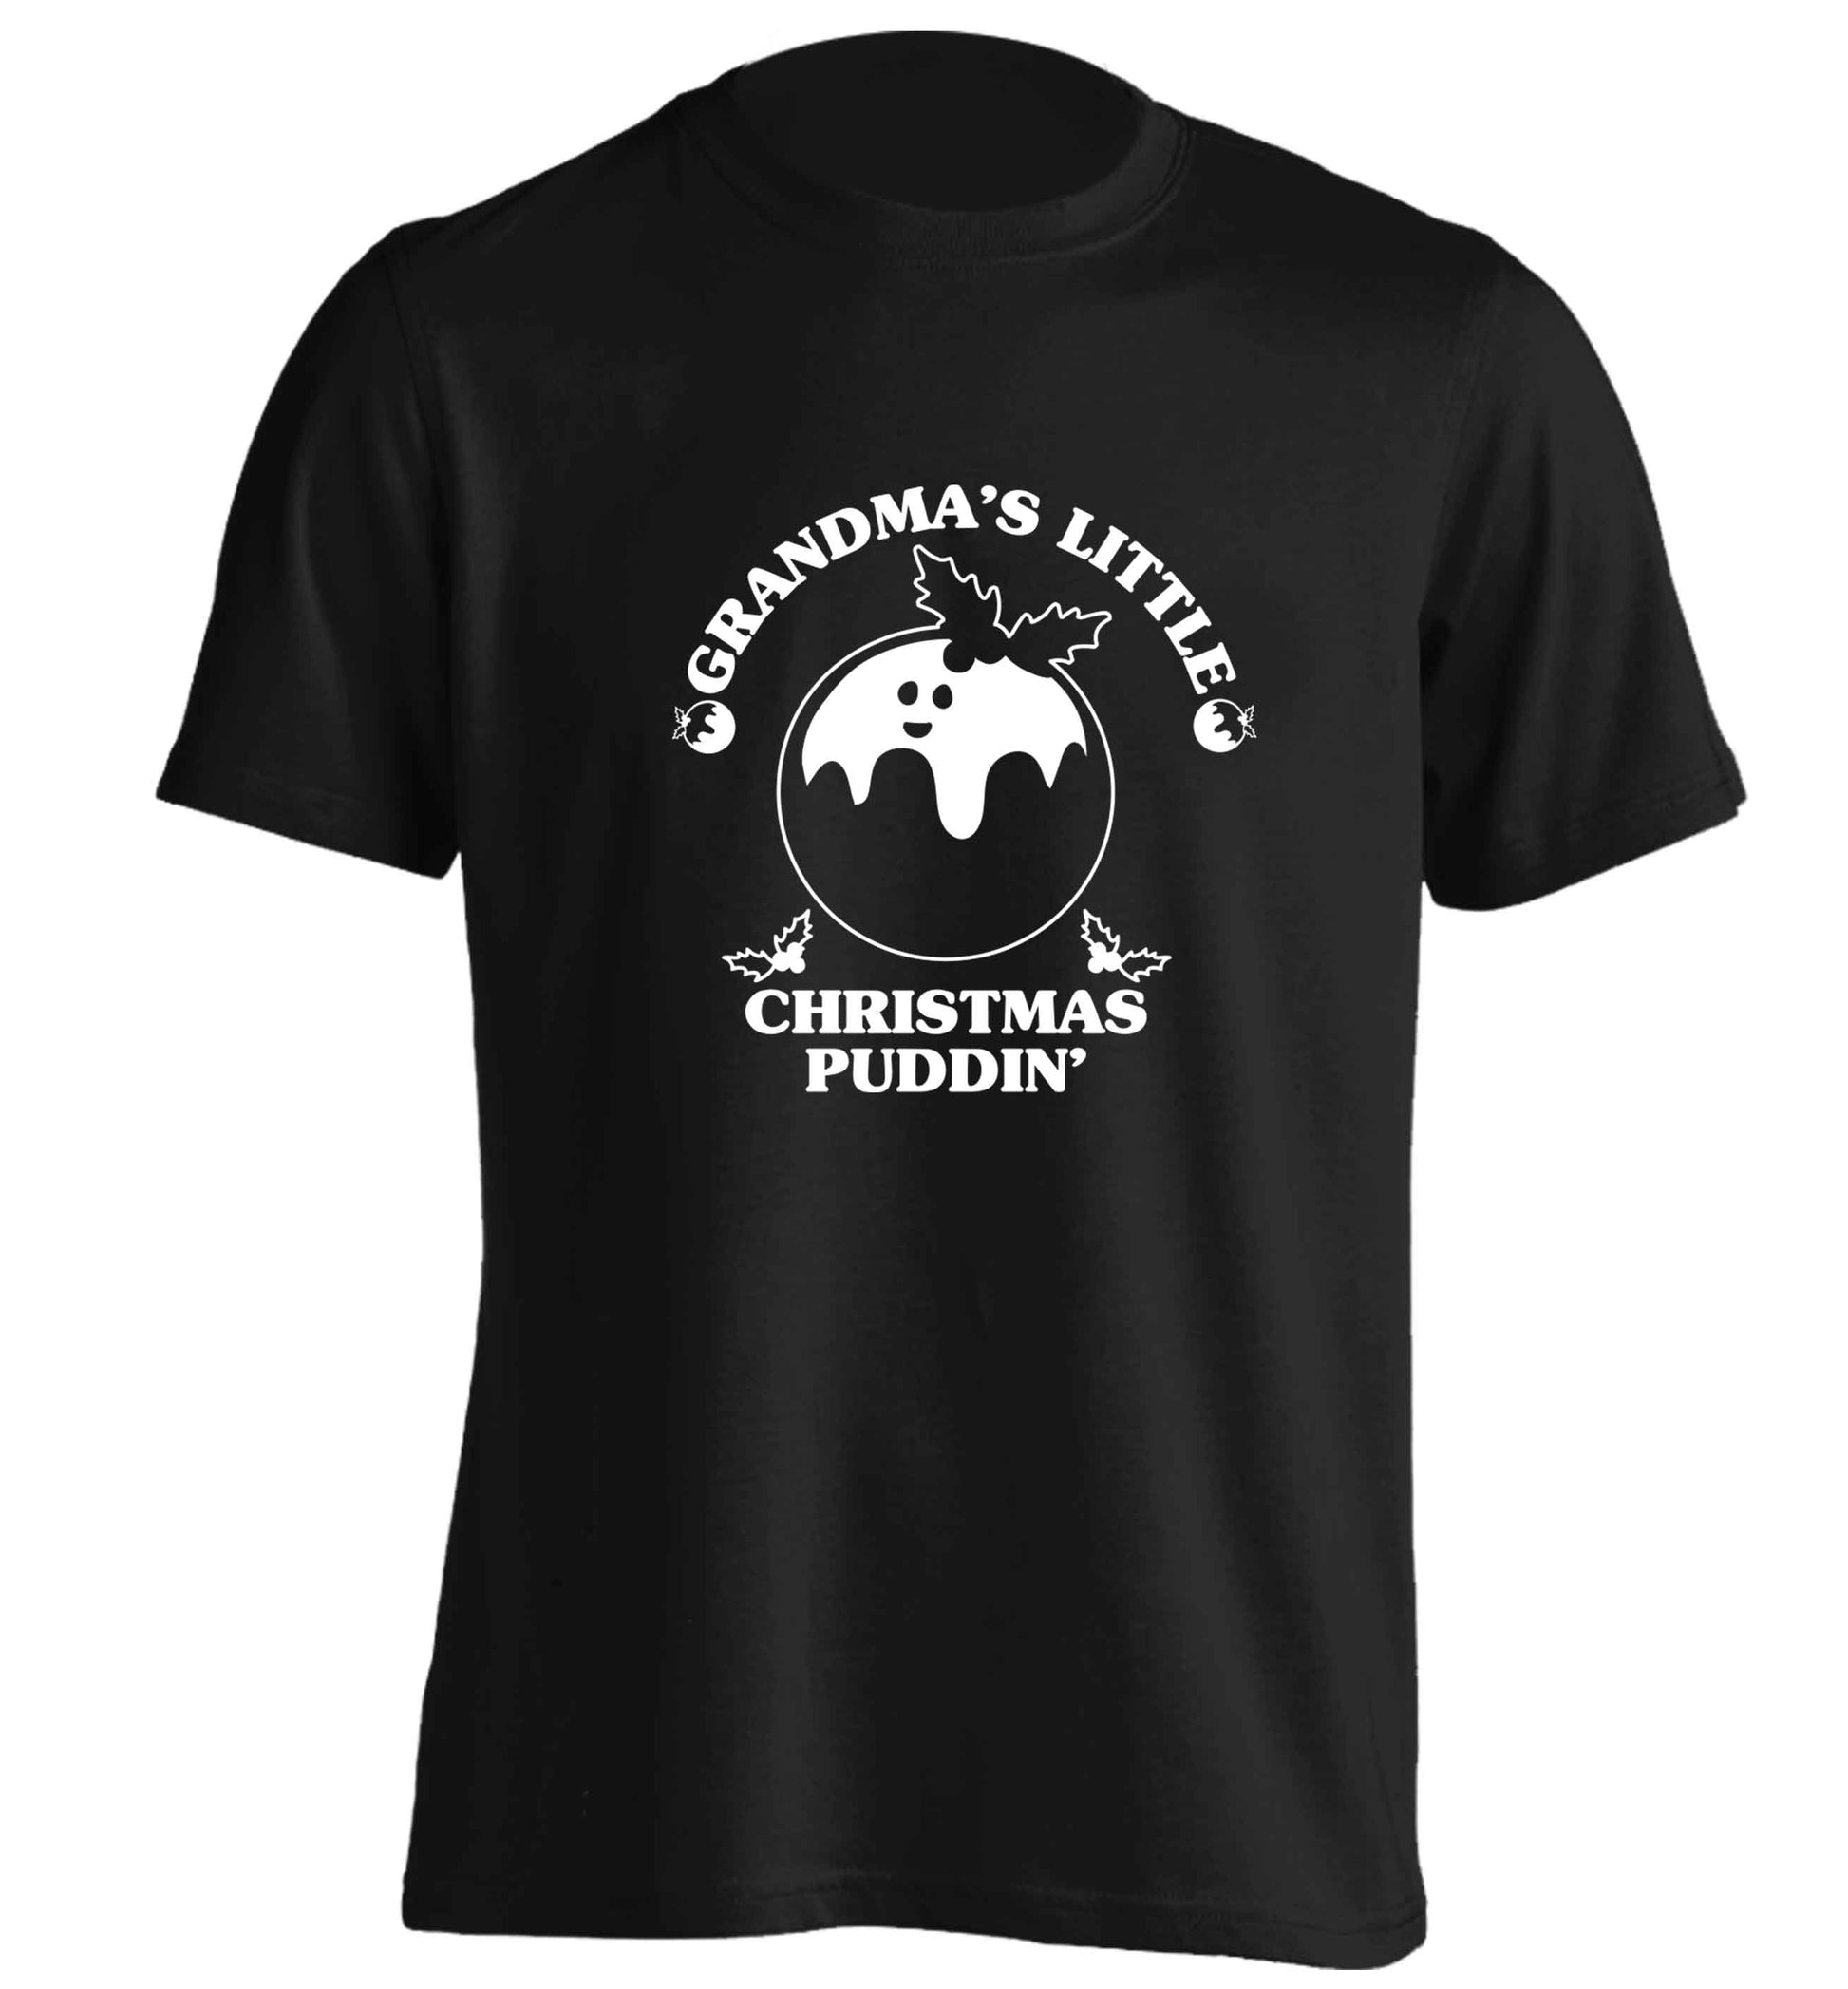 Grandma's little Christmas puddin' adults unisex black Tshirt 2XL